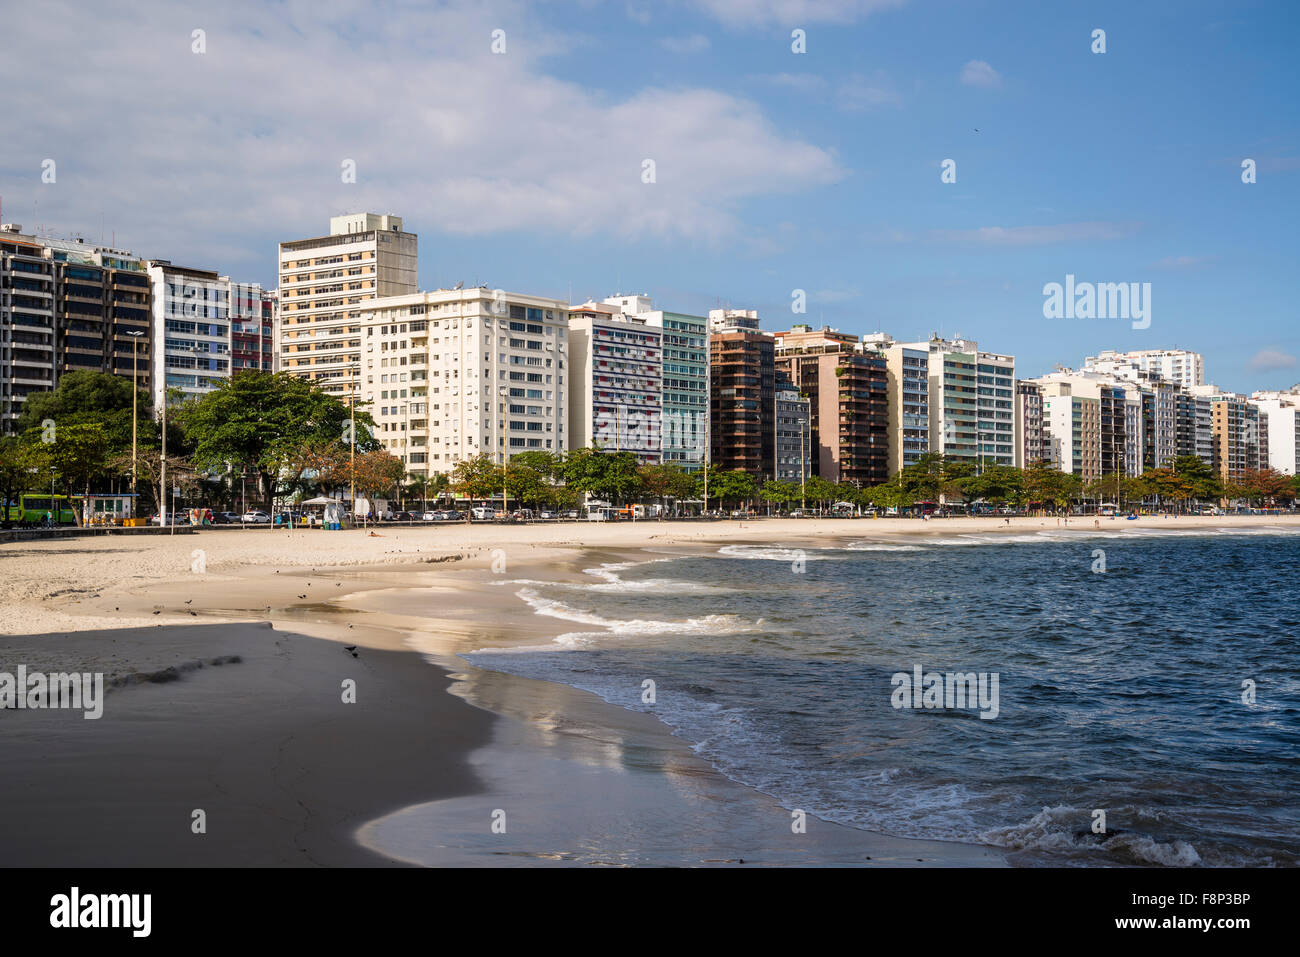 Residential high-rise development along the central beach, Niteroi, Rio de Janeiro, Brazil Stock Photo